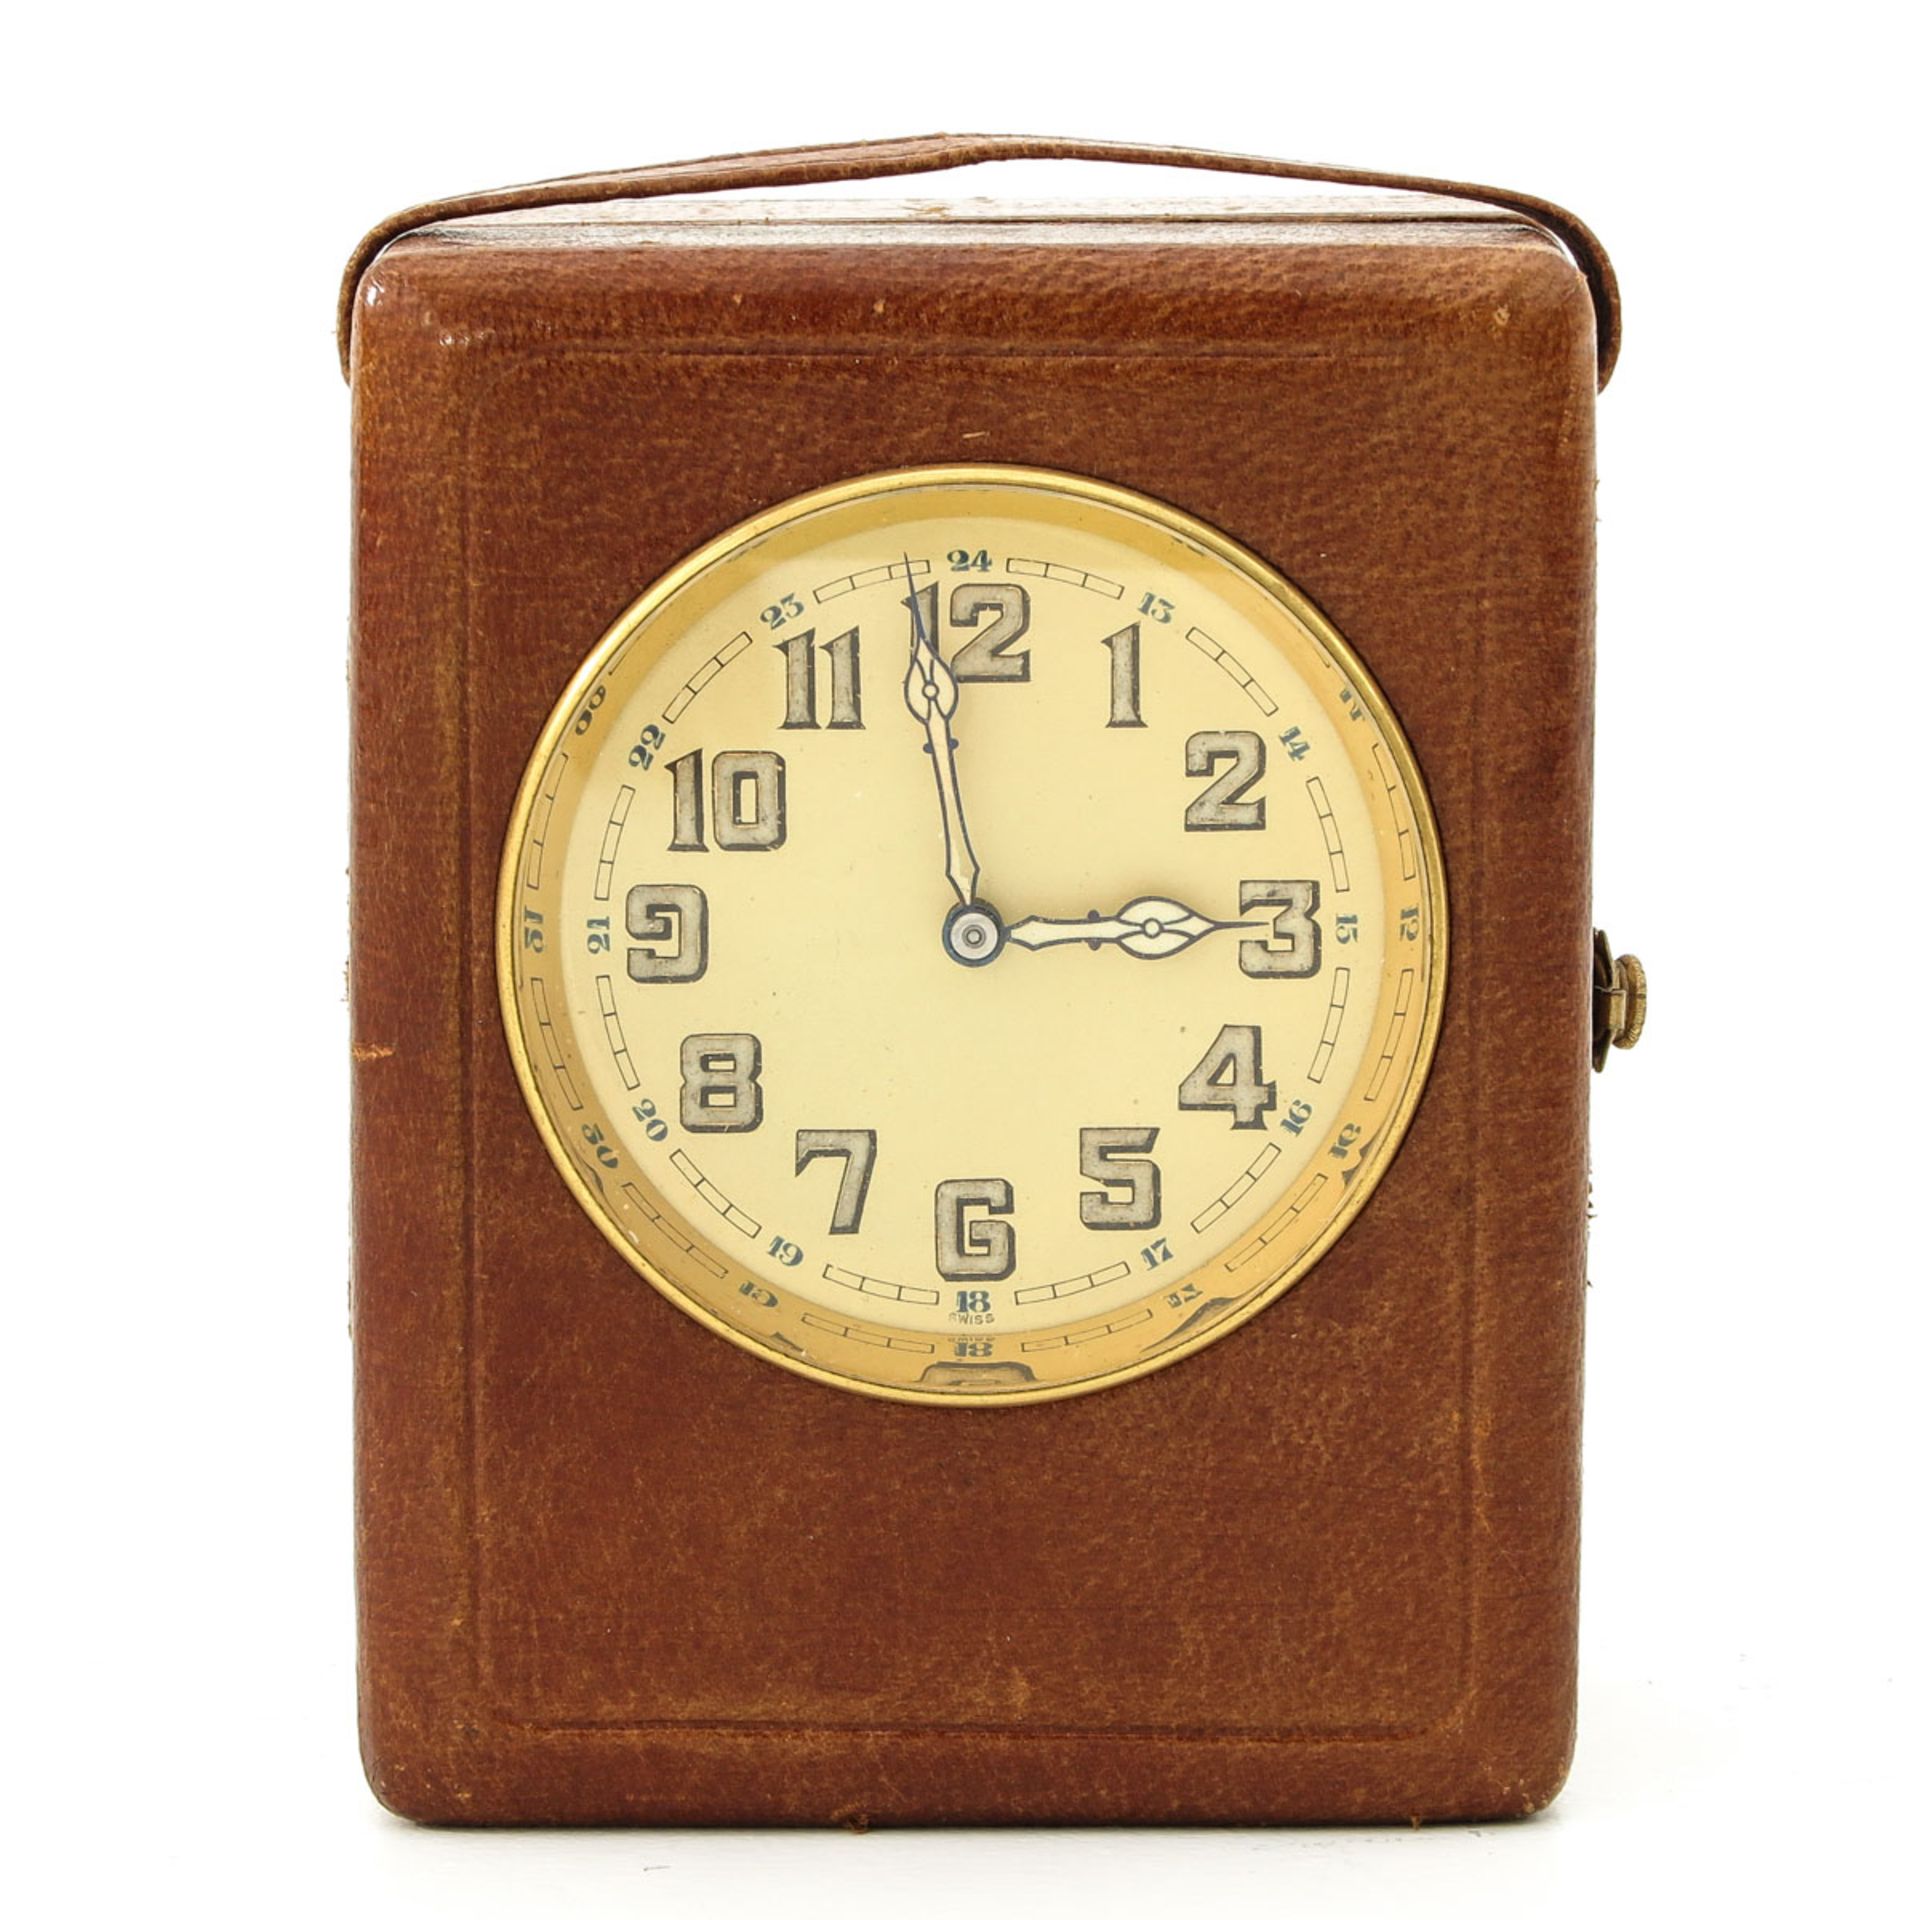 An Abra Watch Company Alarm Clock